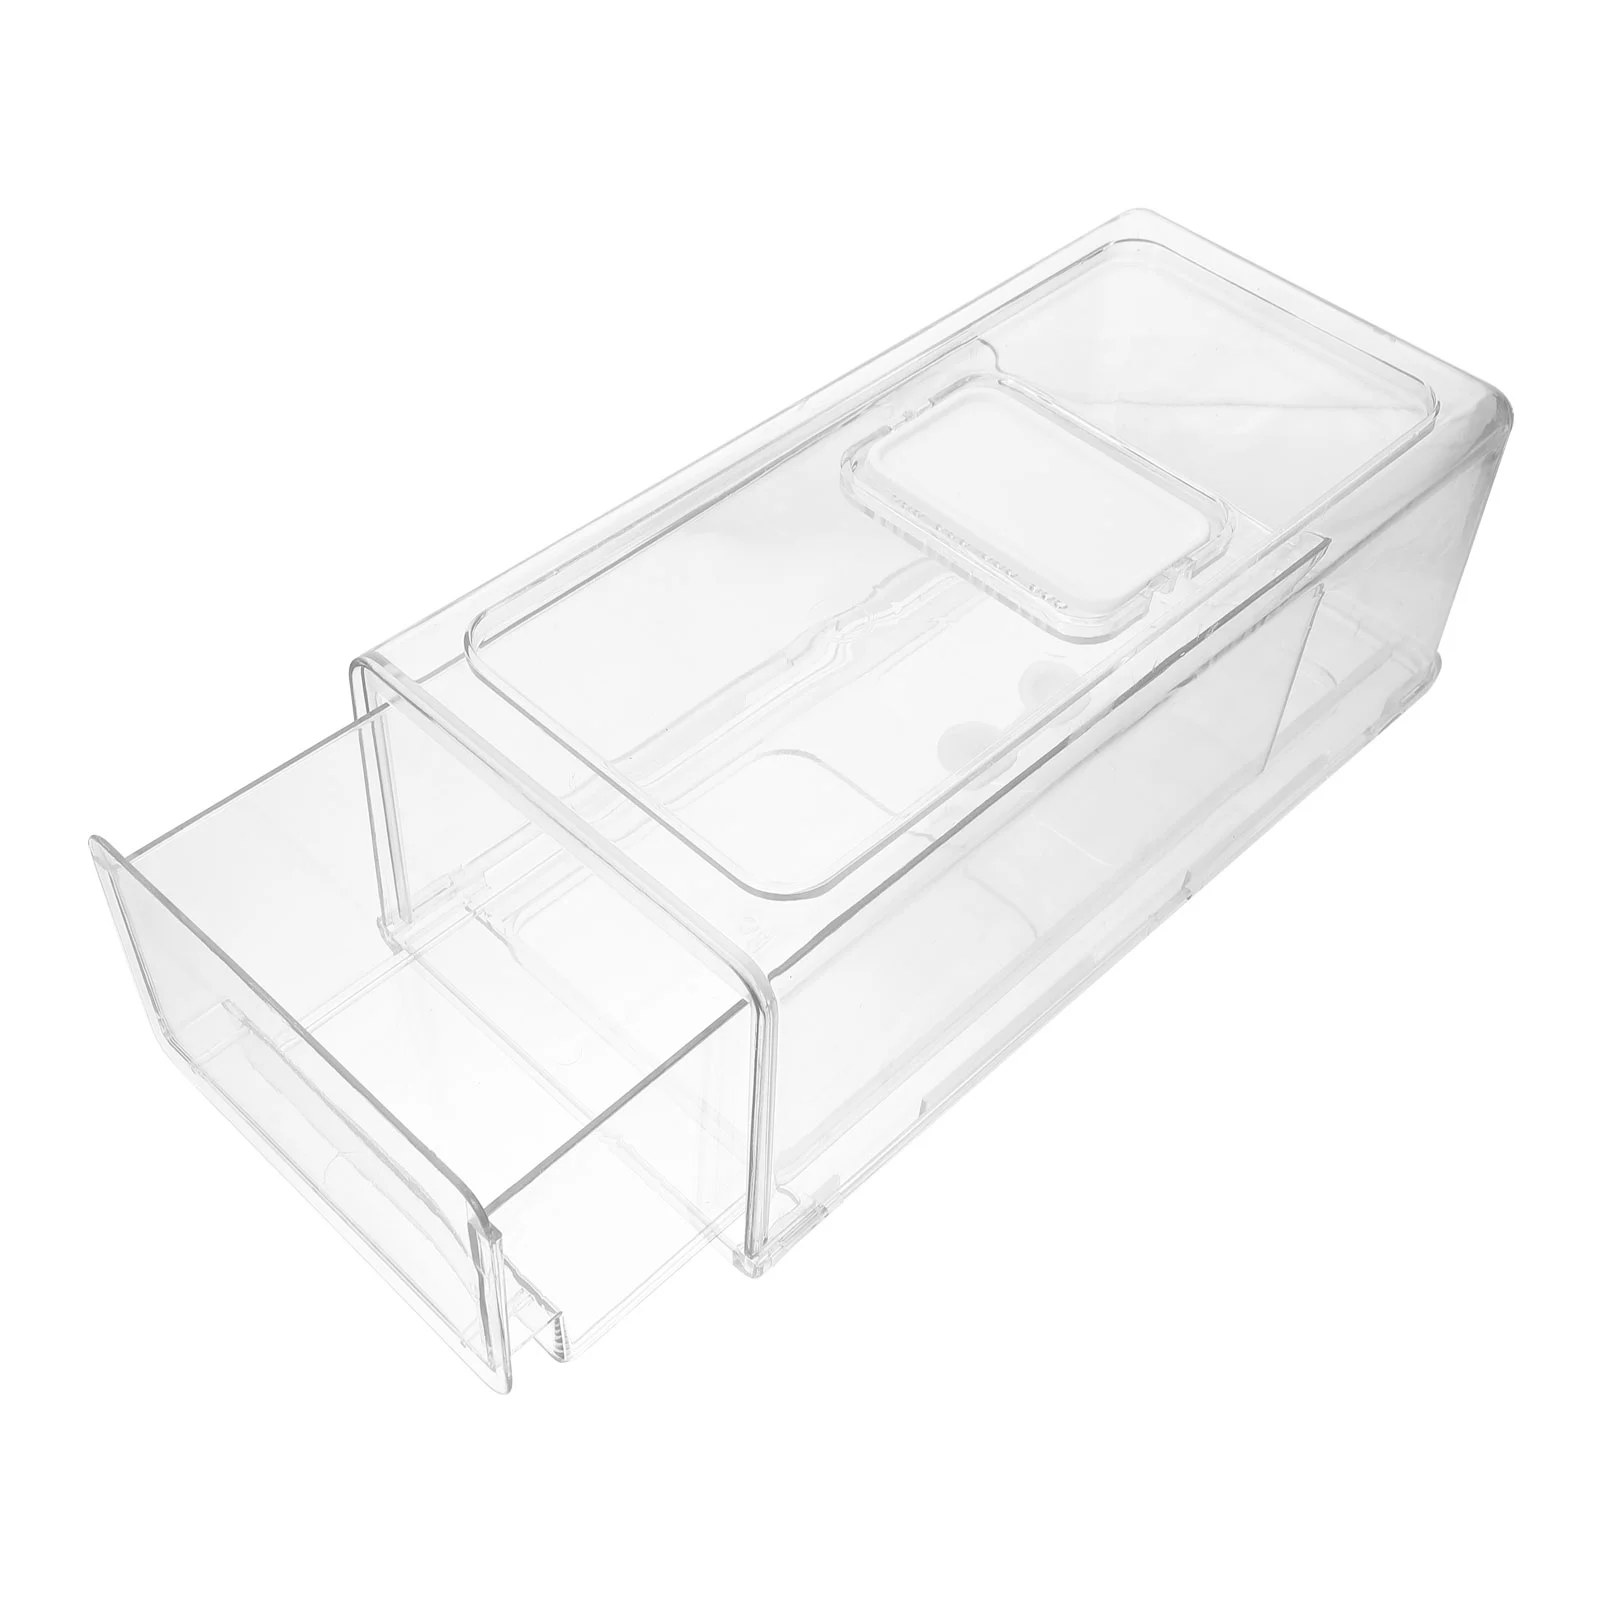 

Storage Plastic Drawers Box Refrigerator Container Freezer Fruit Containers Type Case Holder Fridge